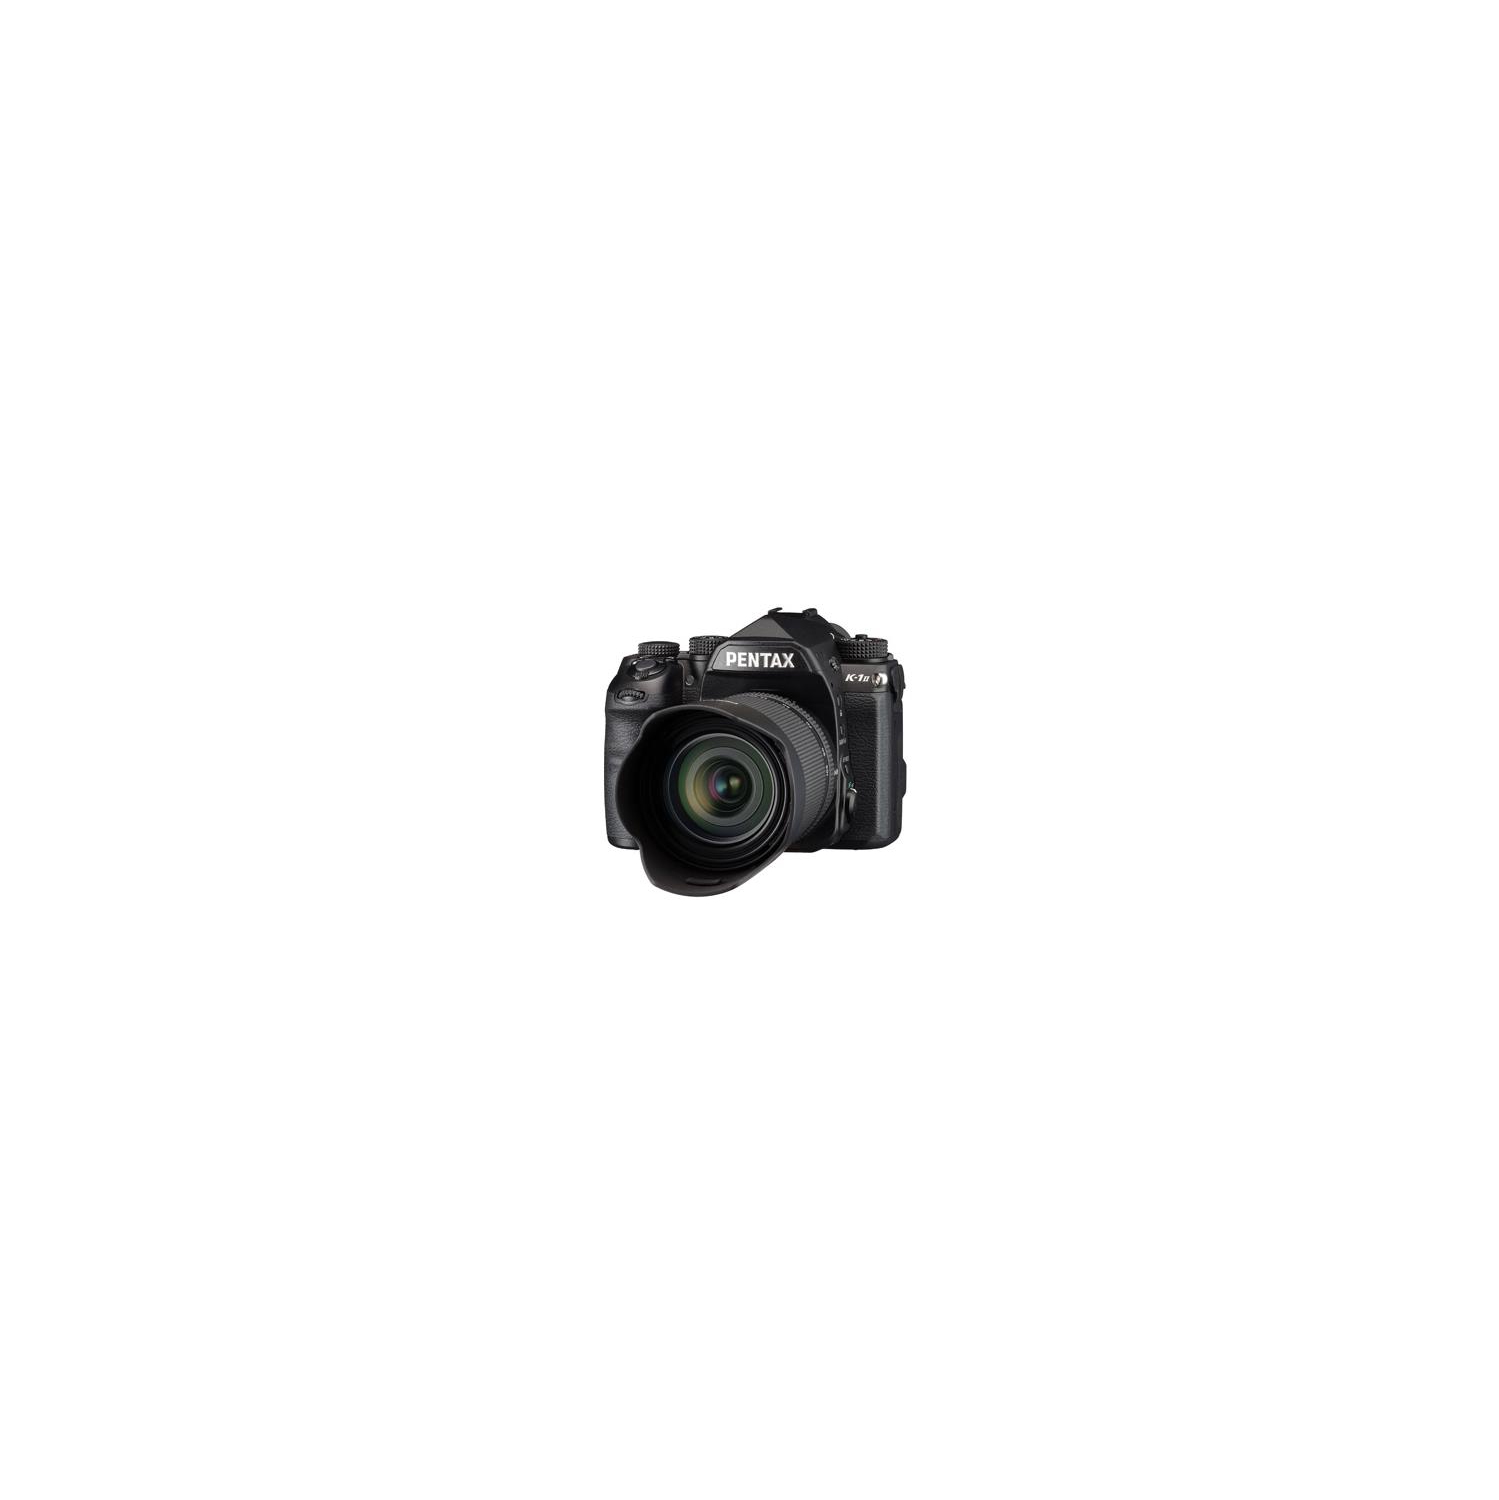 Pentax K-1 Mark II DSLR Camera with 28-105mm Lens